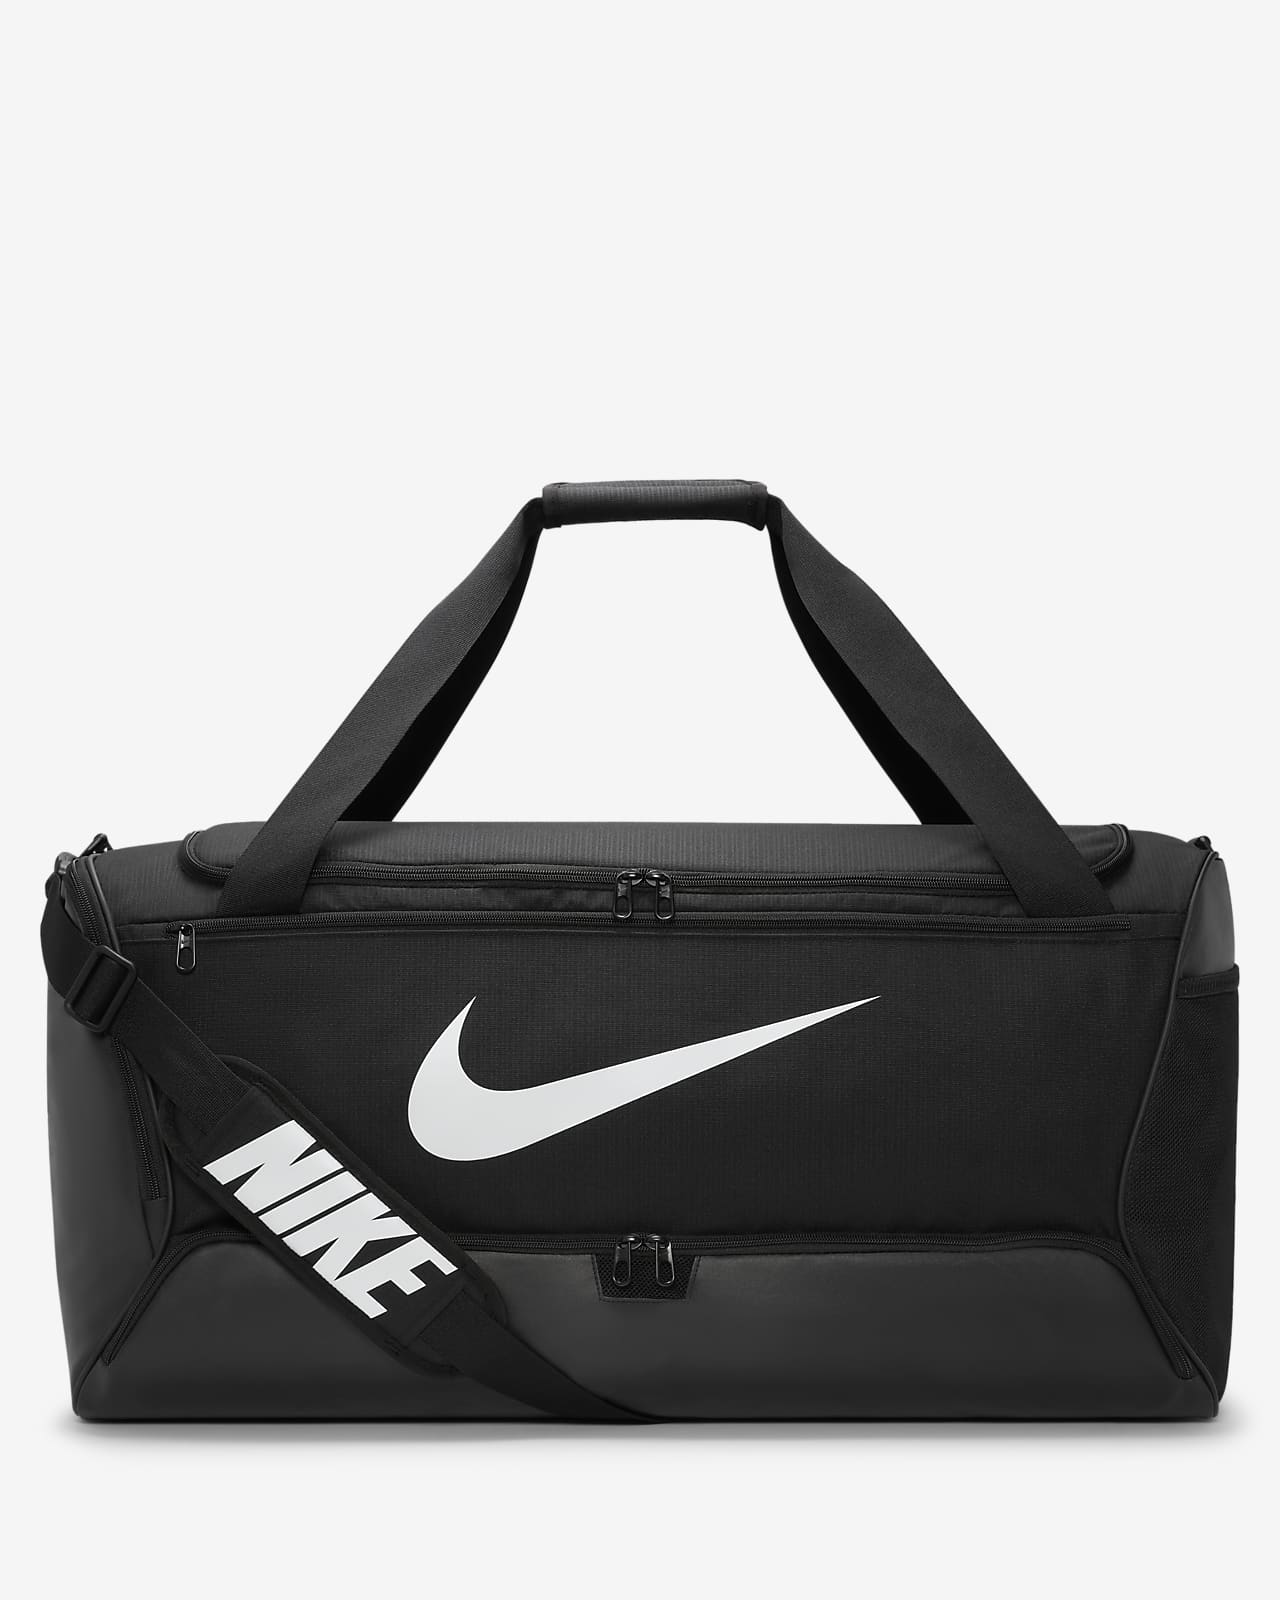 Buy Nike Brasilia Training Medium Duffle Bag, Durable Nike Duffle Bag for  Women & Men with Adjustable Strap, Black/Black/Habanero Red at Amazon.in